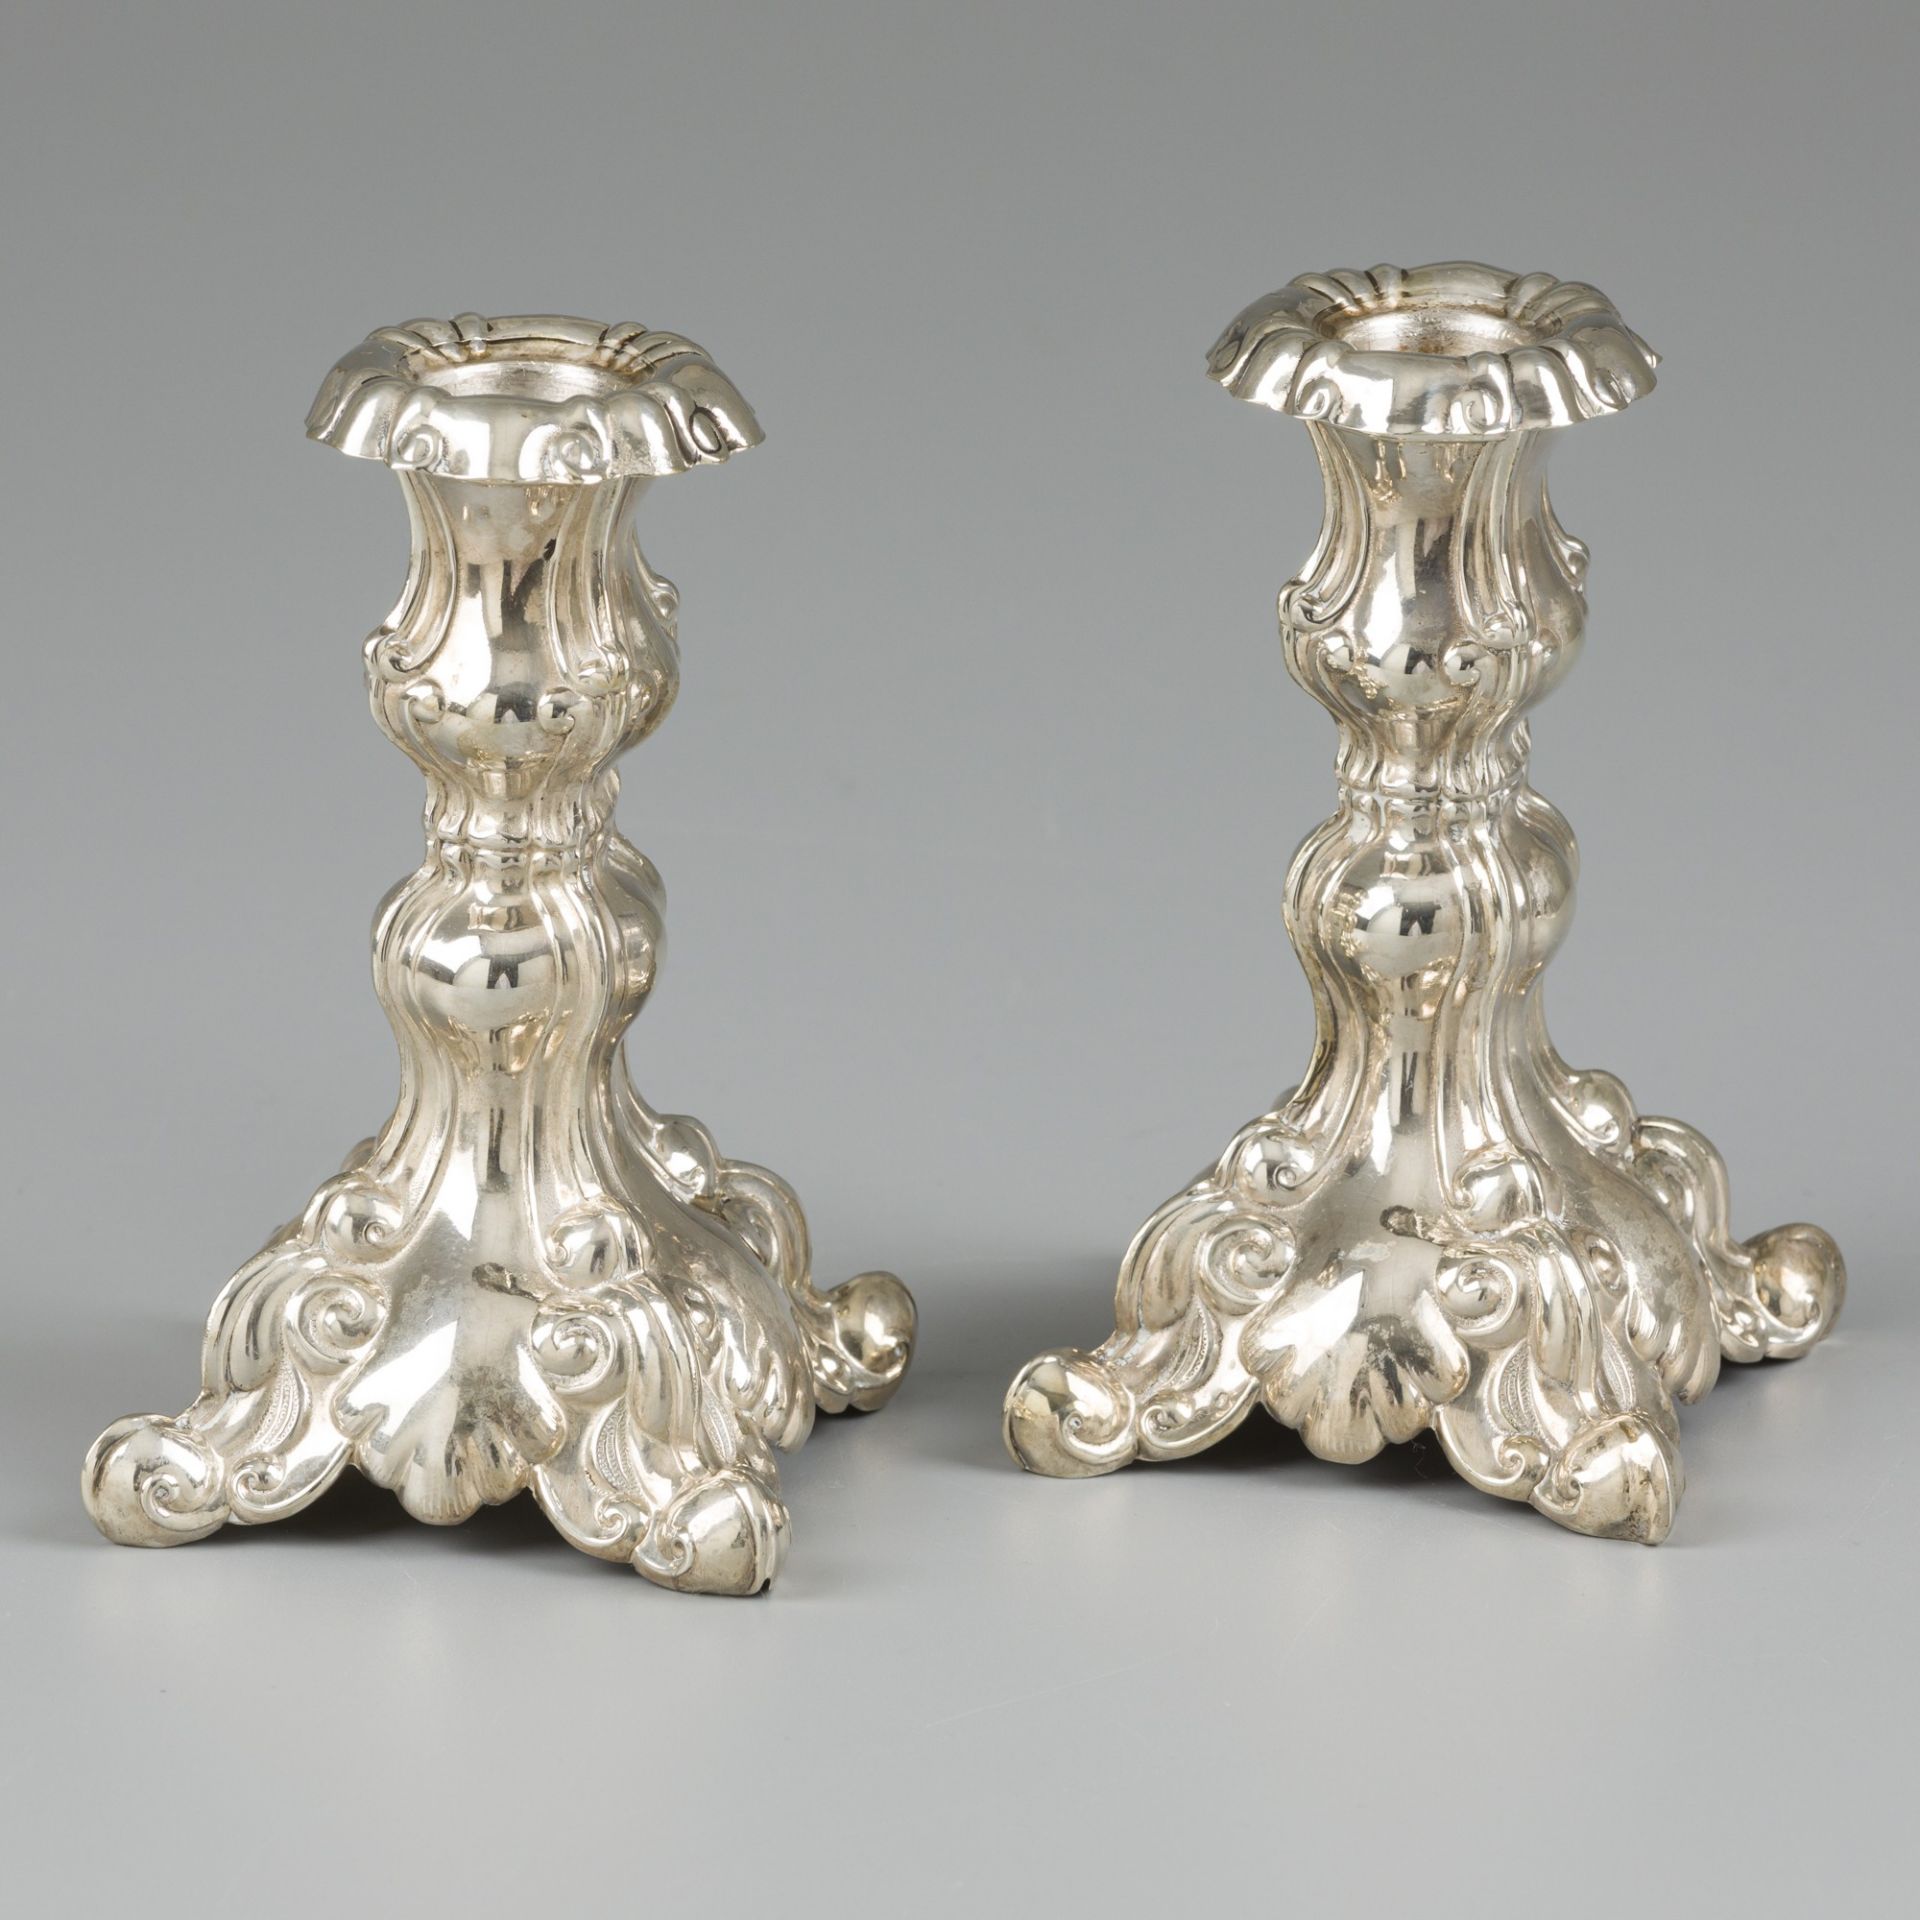 2-piece set of silver candlesticks.